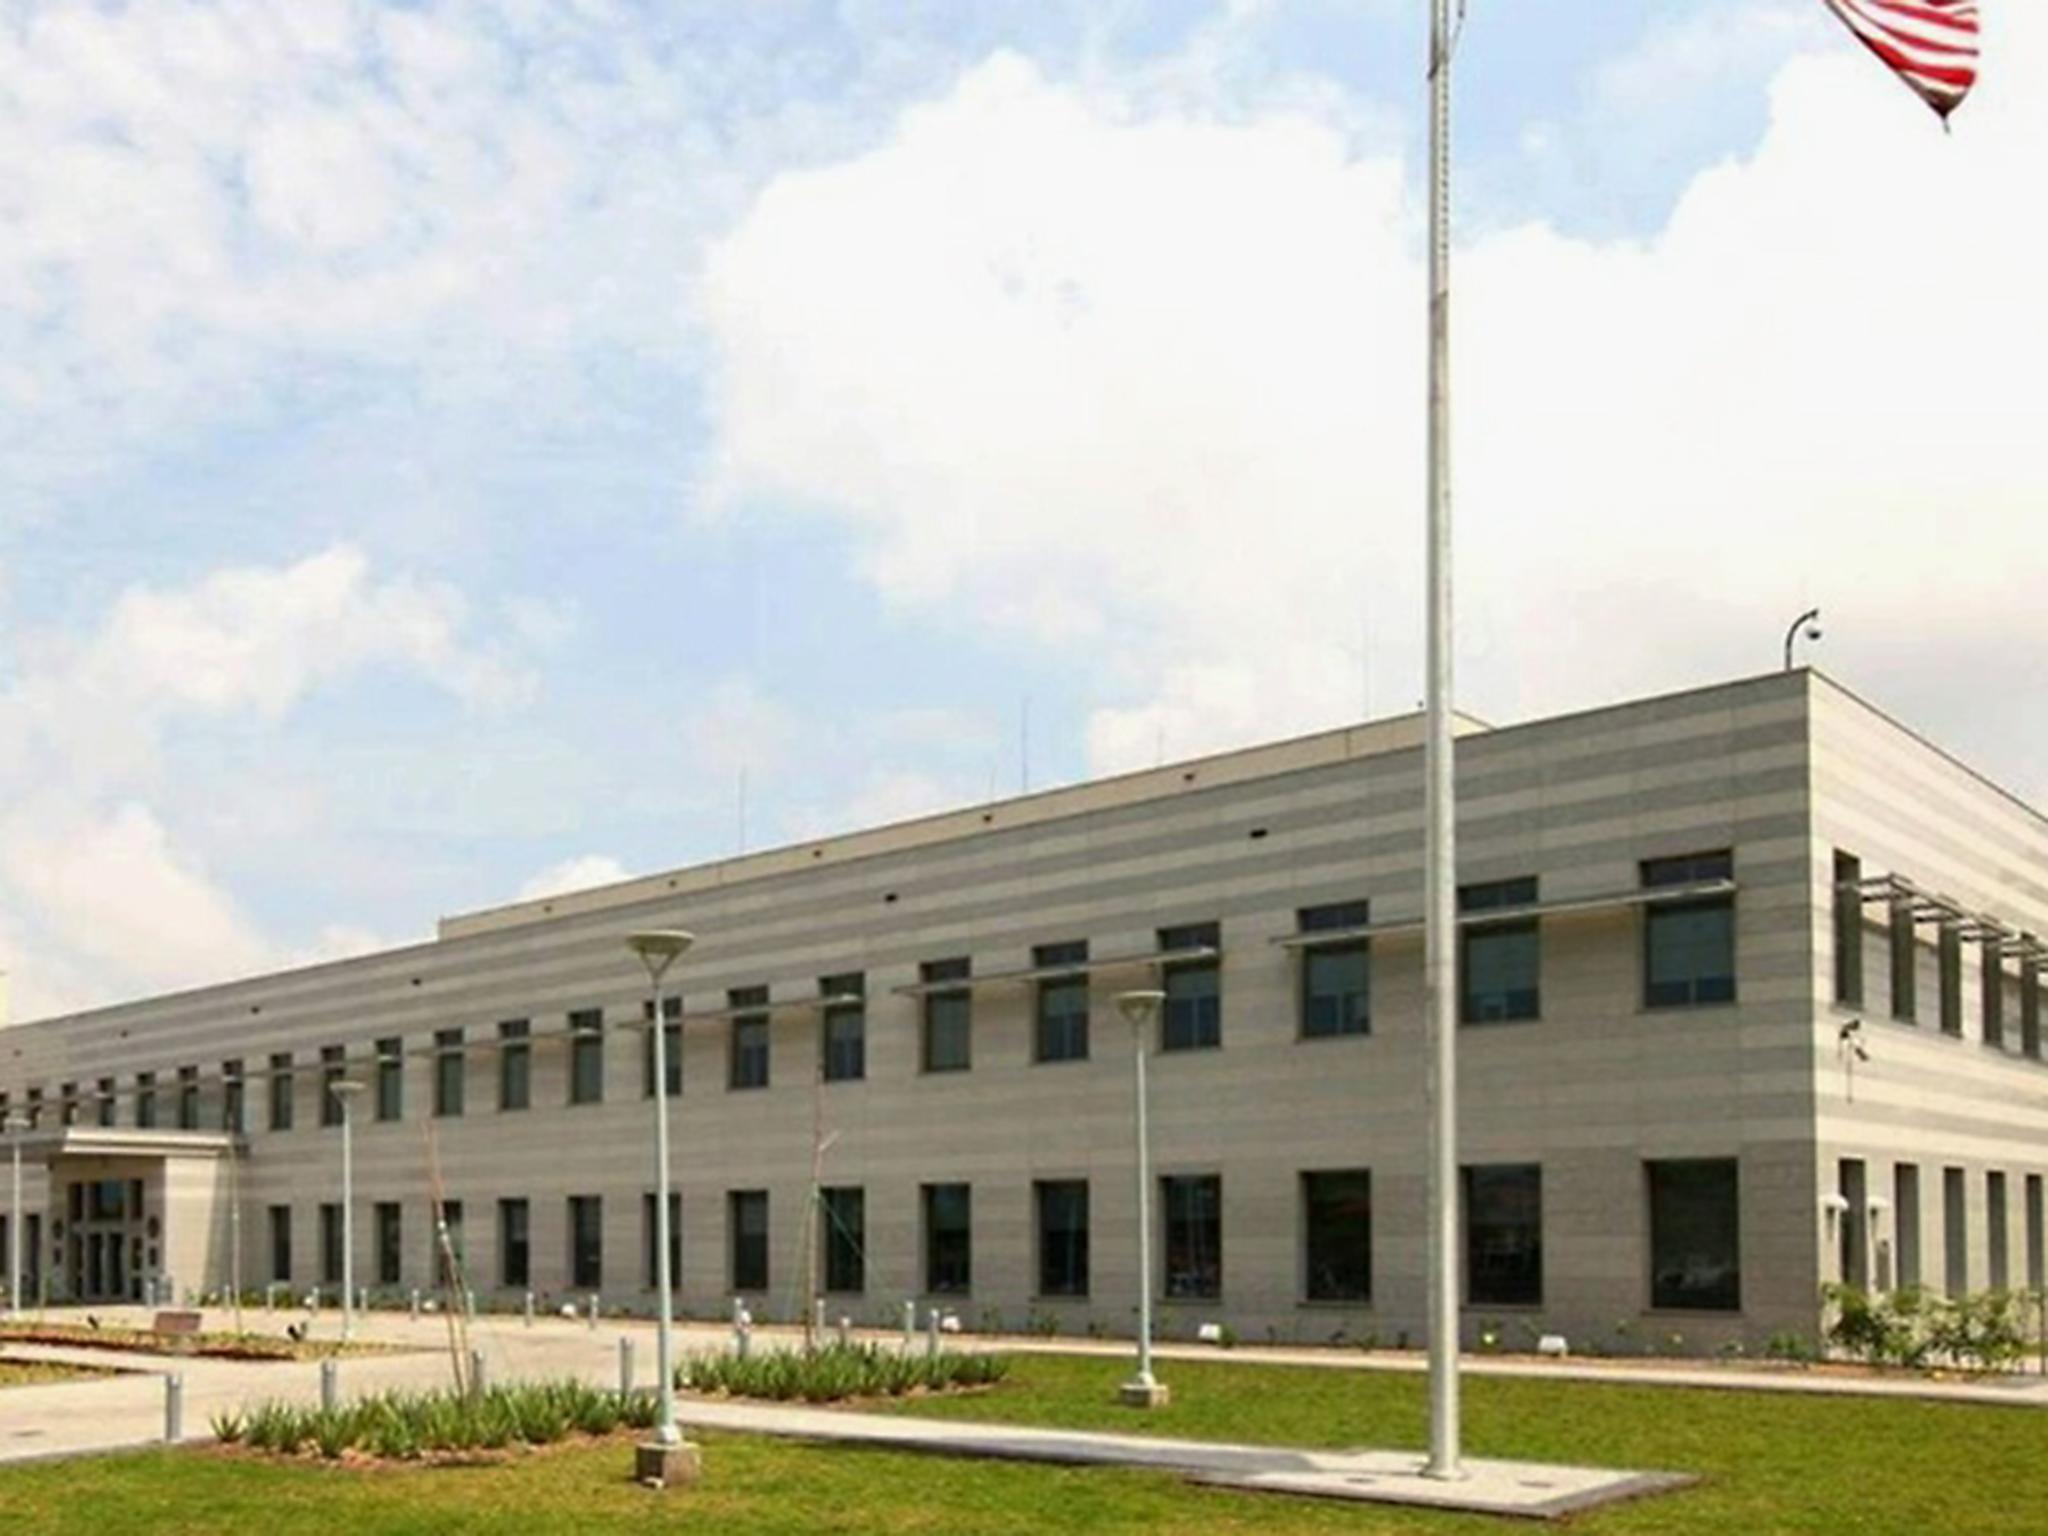 The legitimate US embassy in Accra, Ghana